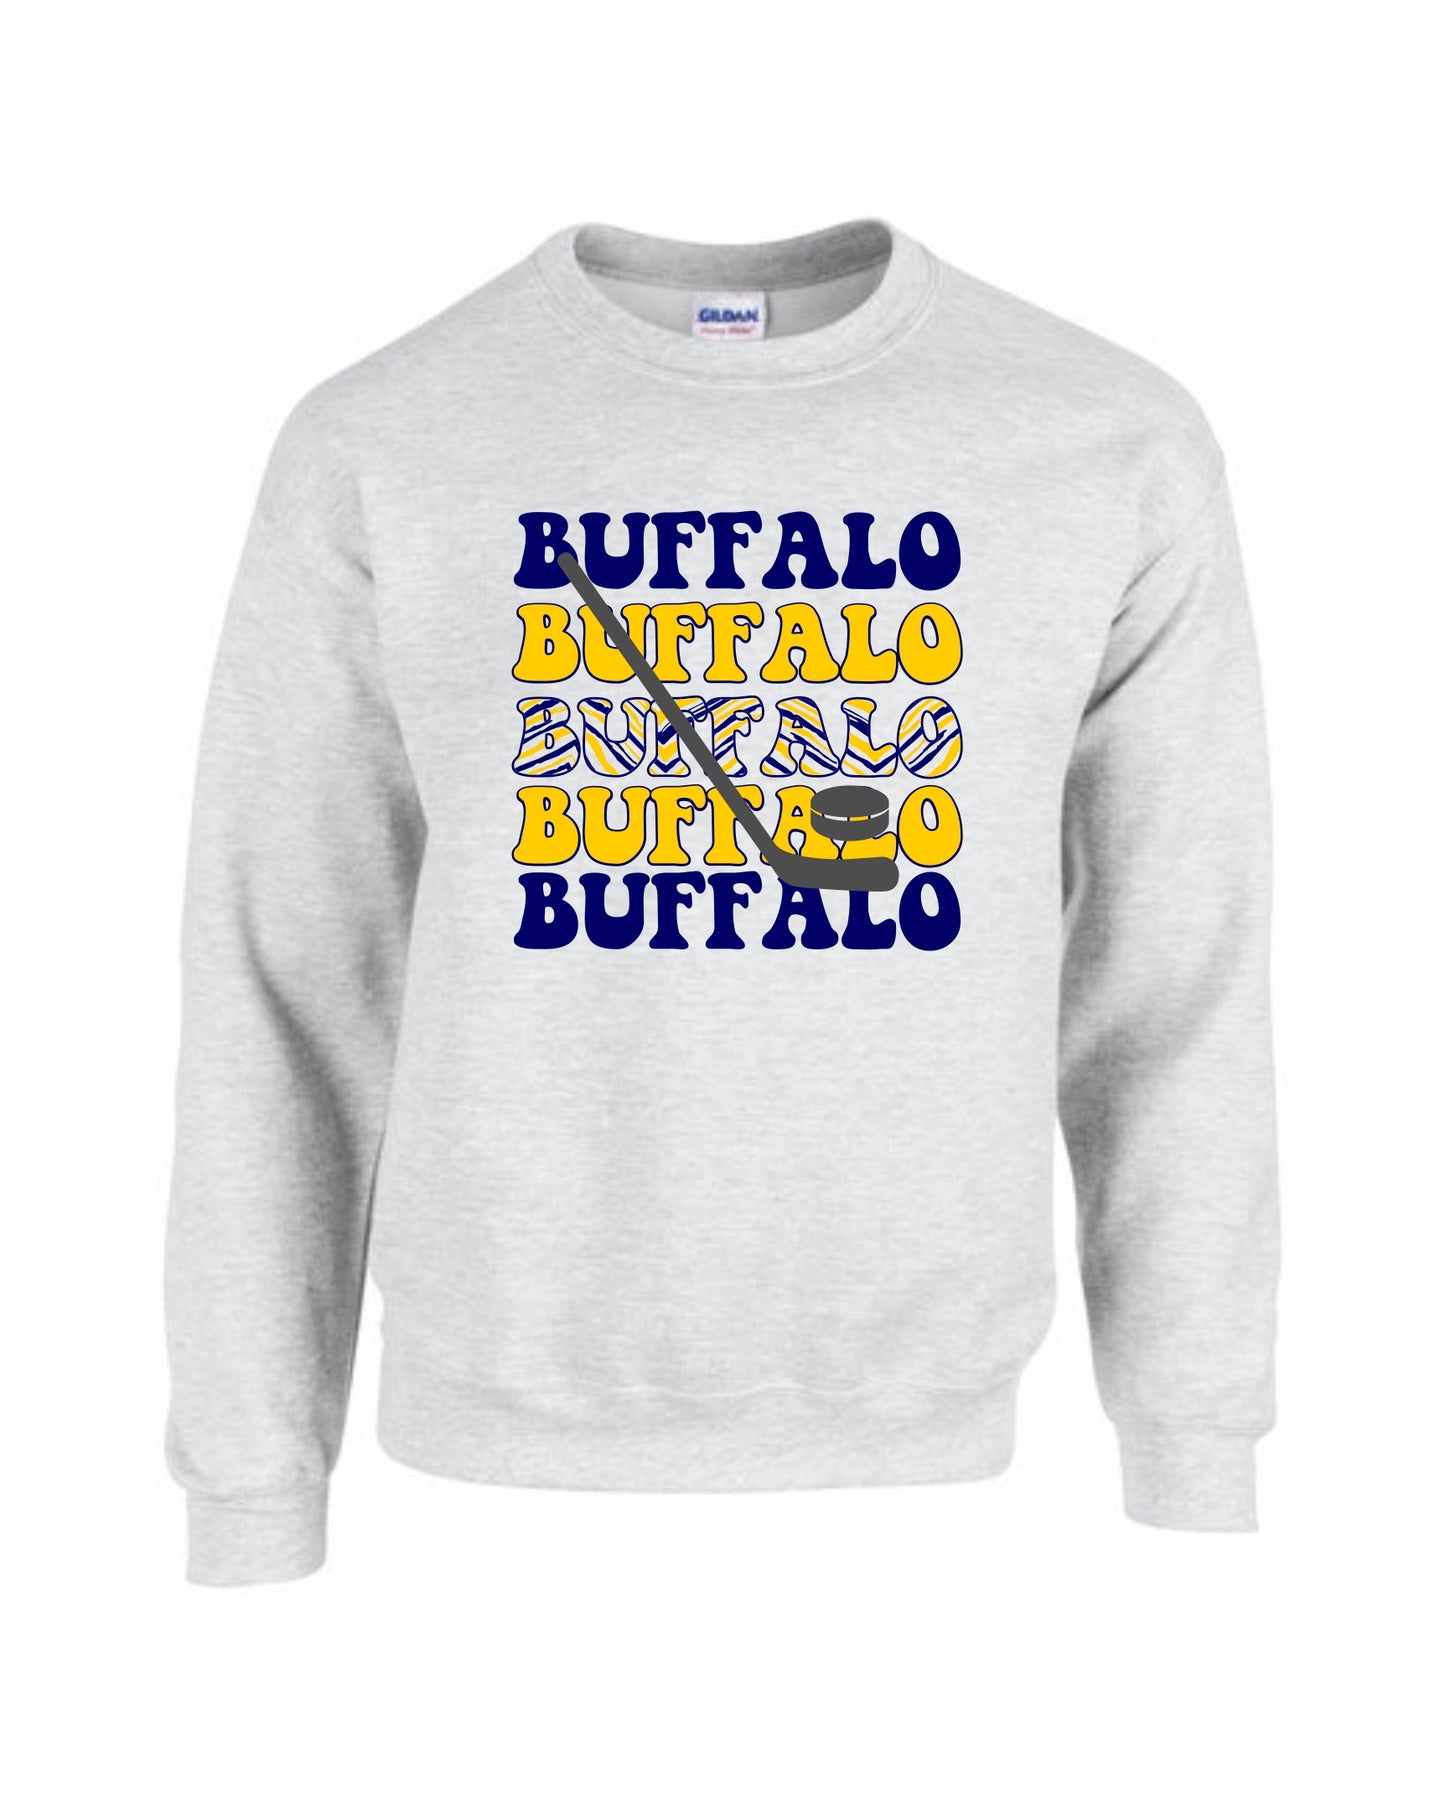 Buffalo hockey Zubaz crewneck, Buffalo hockey sweatshirt, Buffalo hockey